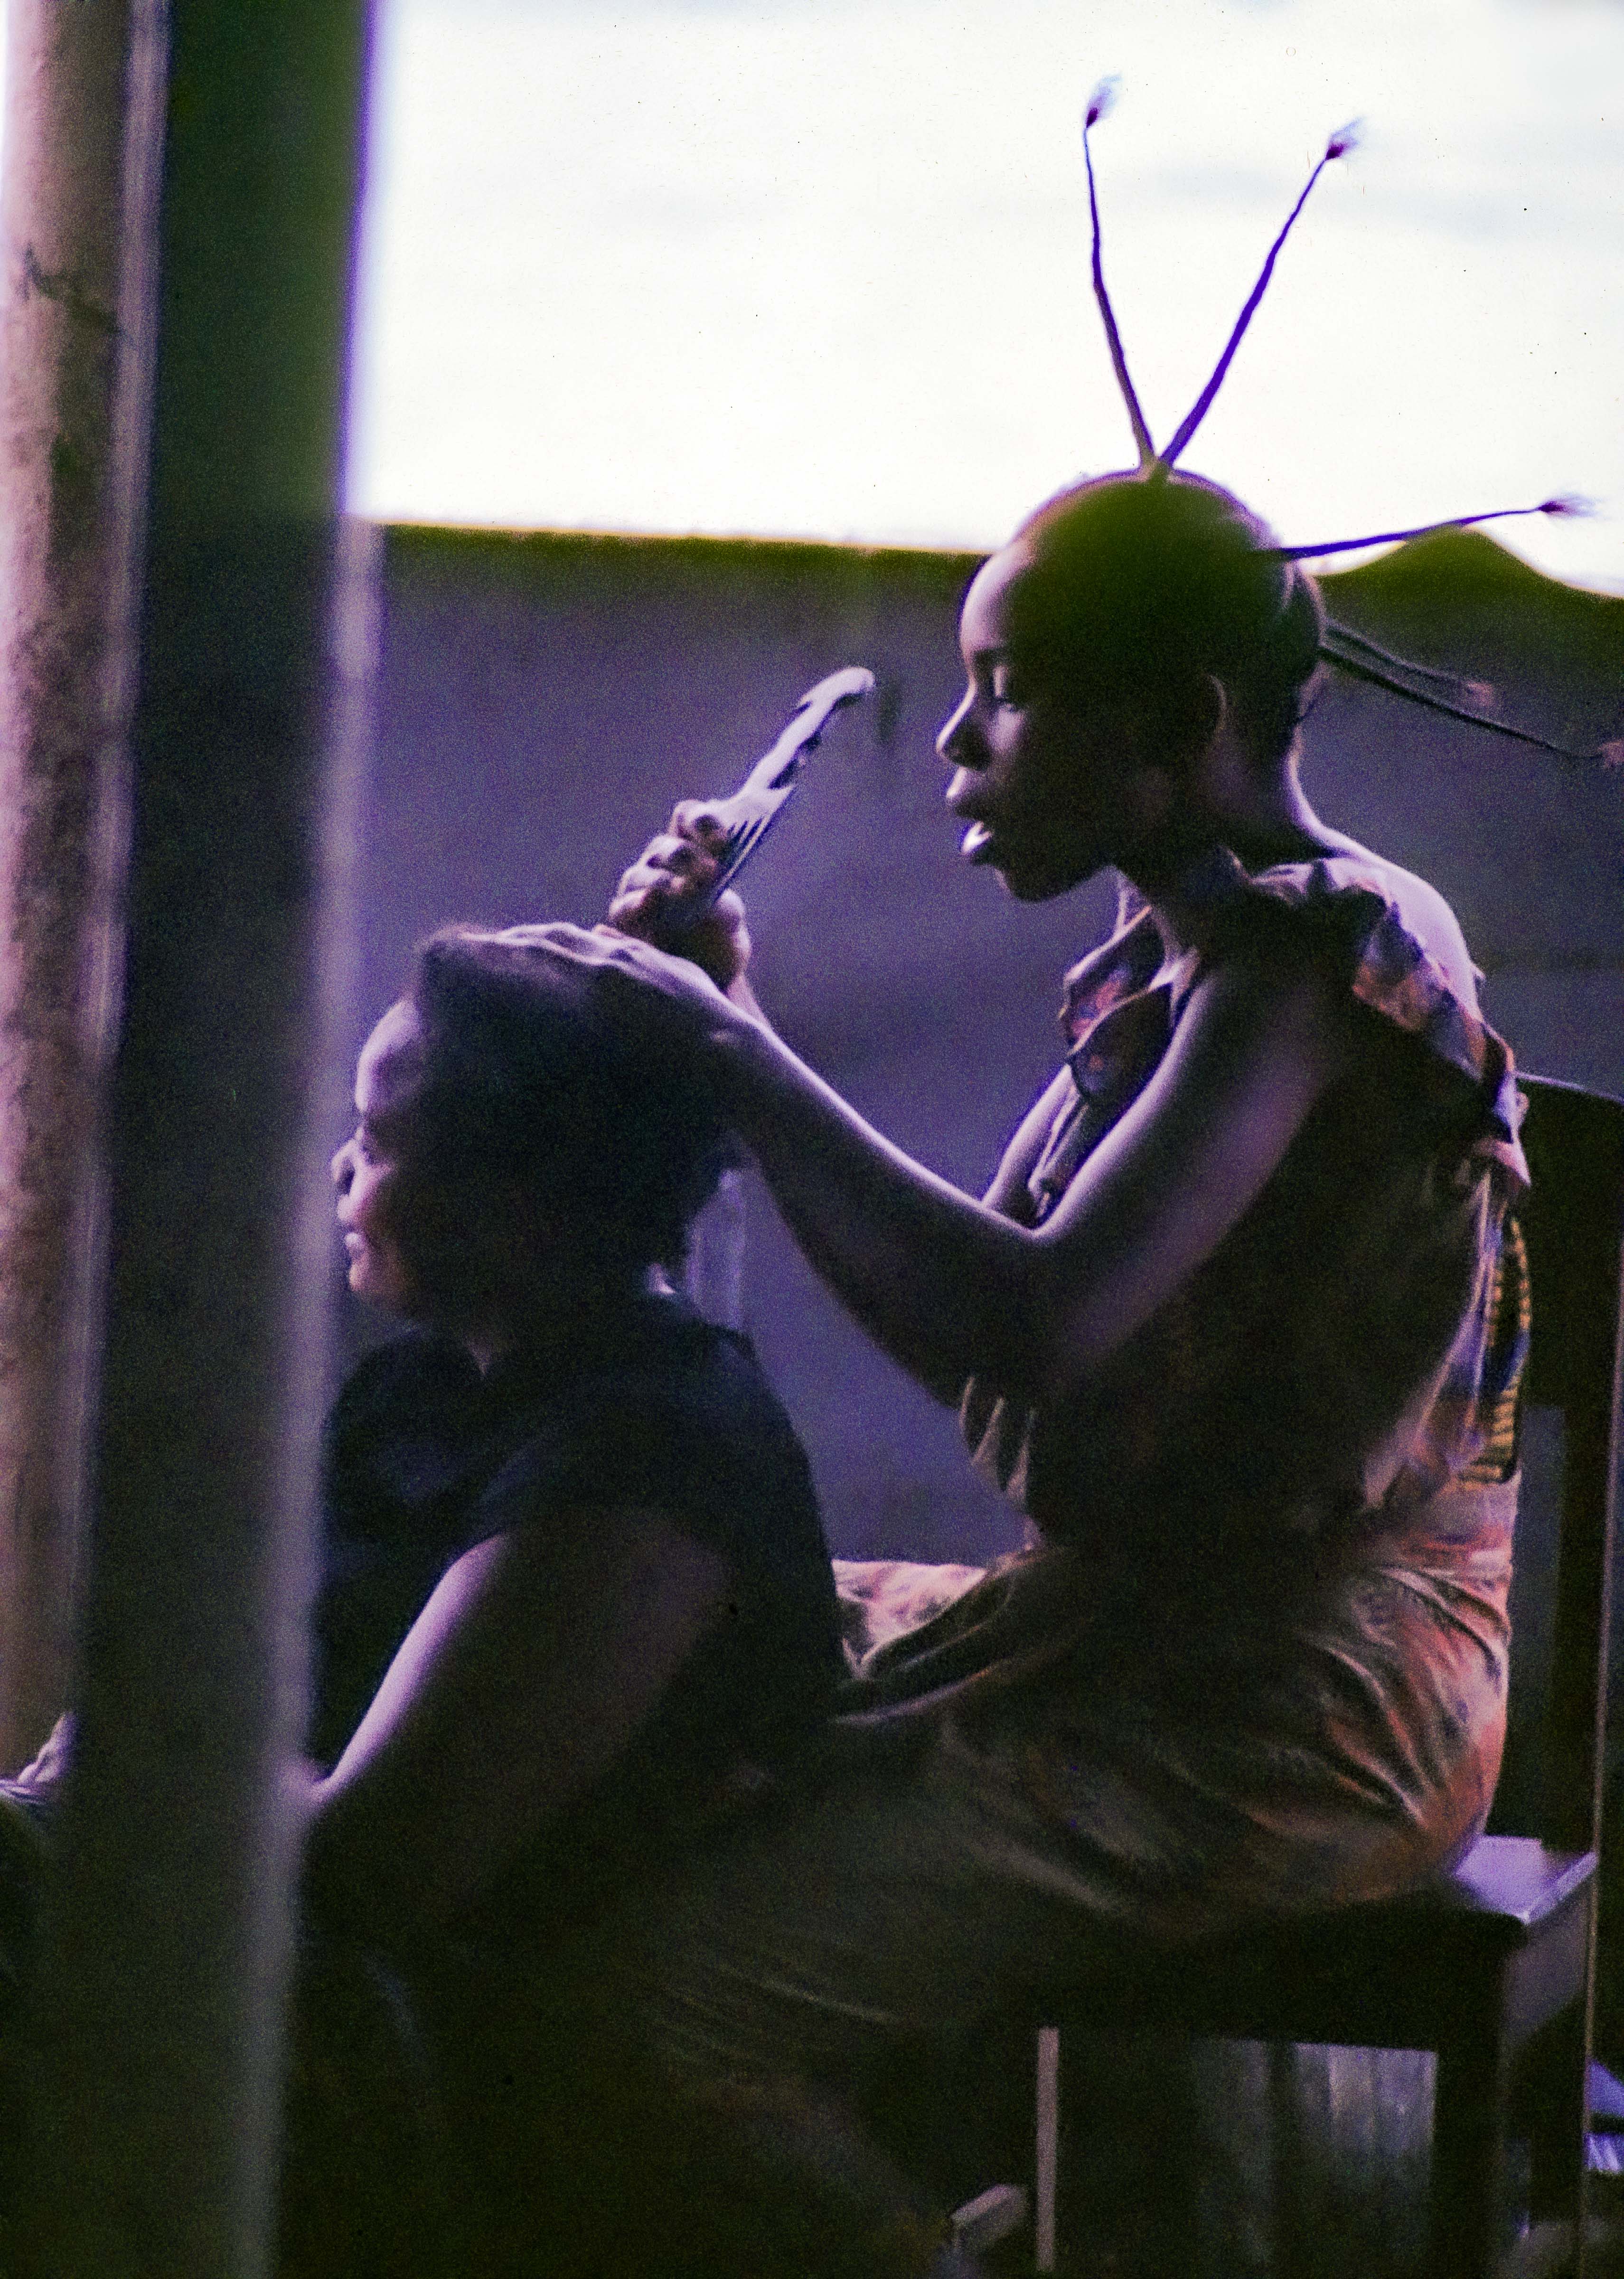 Congo Zaire, The Longest Spiky Hair, 1984